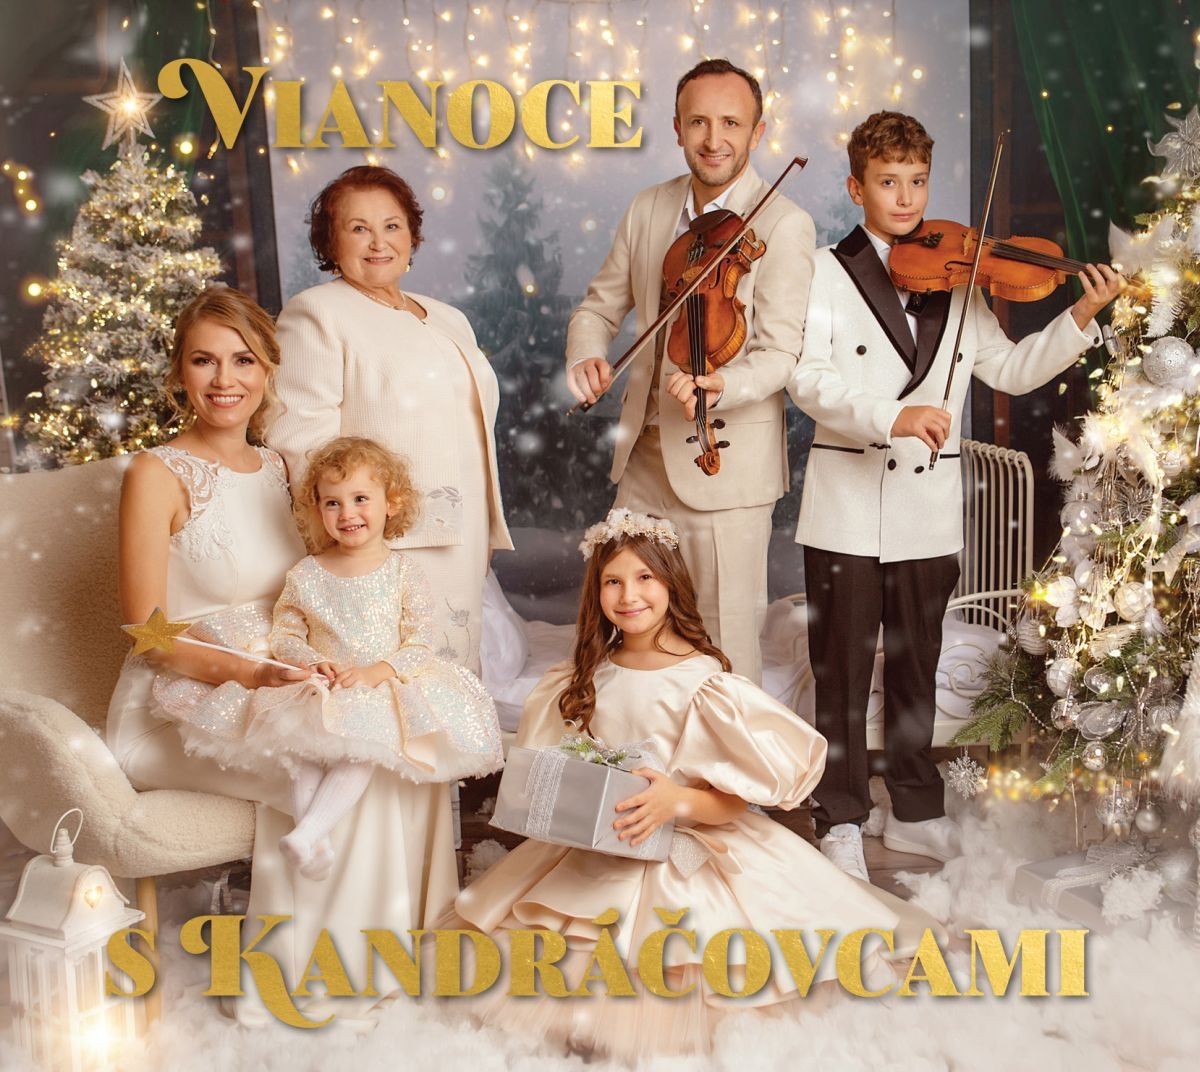 VIANOCE S KANDROVCAMI - Novinka